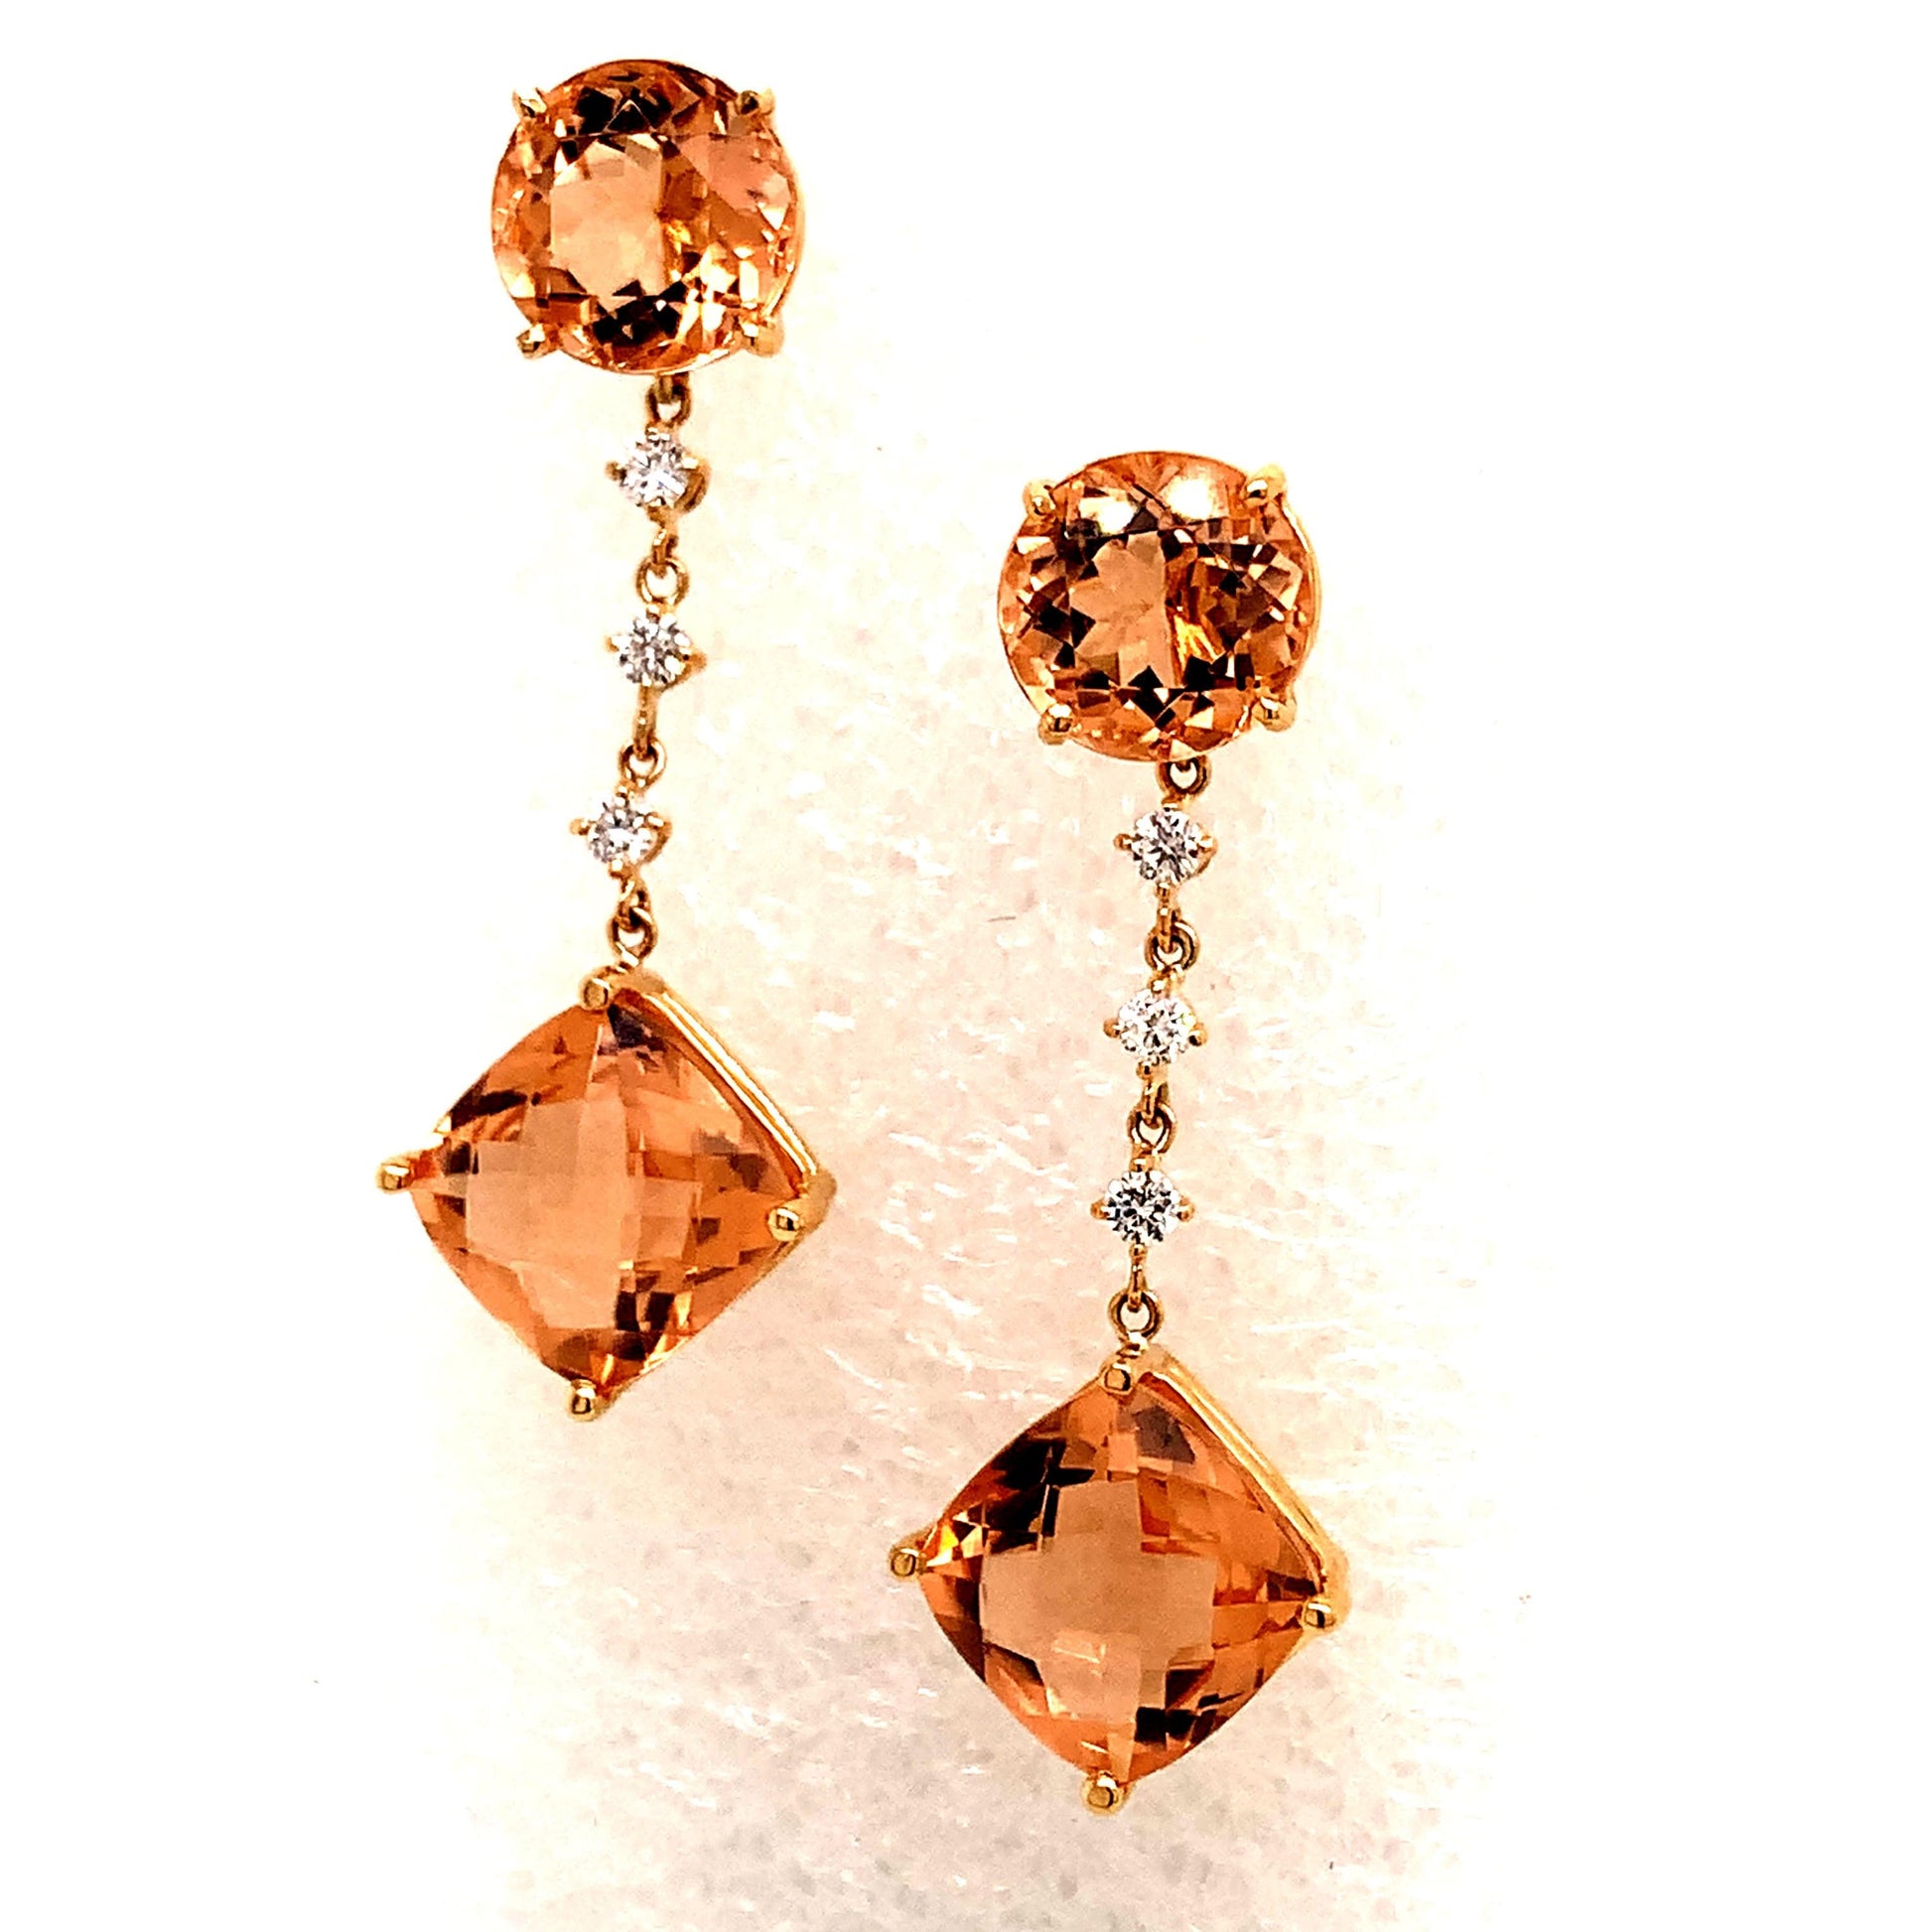 Natural Morganite Diamond Earrings 14k Gold 10.1 TCW Certified $5,950 111536 - Certified Estate Jewelry